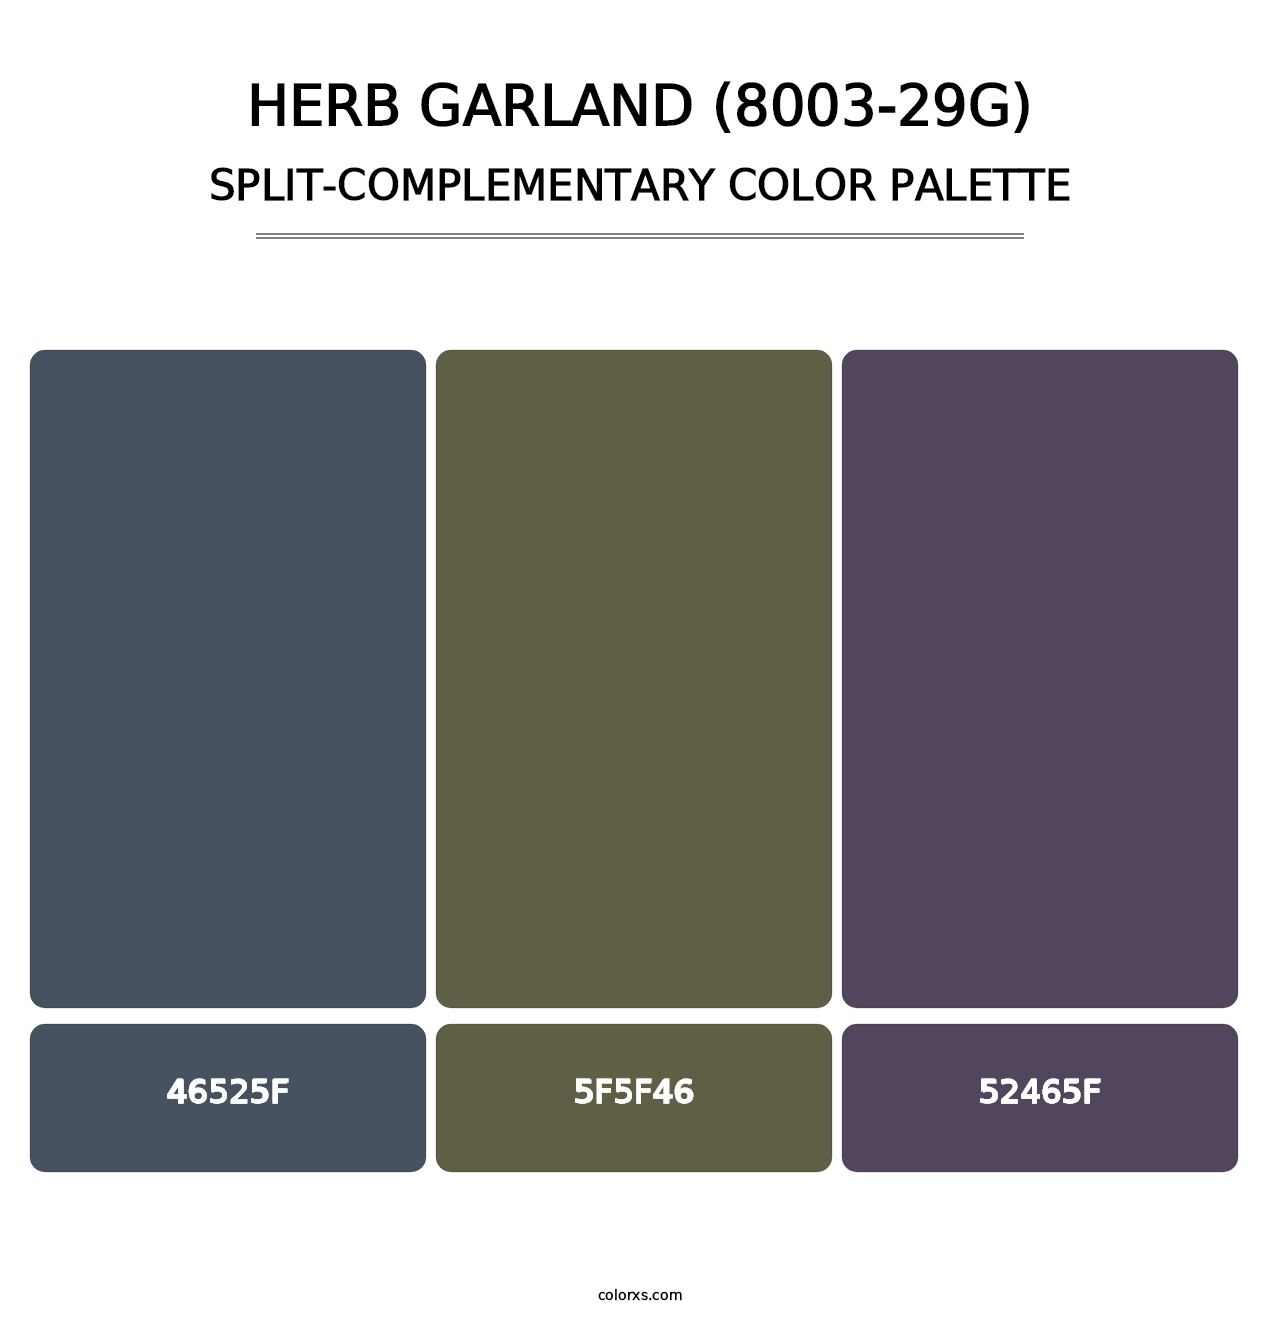 Herb Garland (8003-29G) - Split-Complementary Color Palette